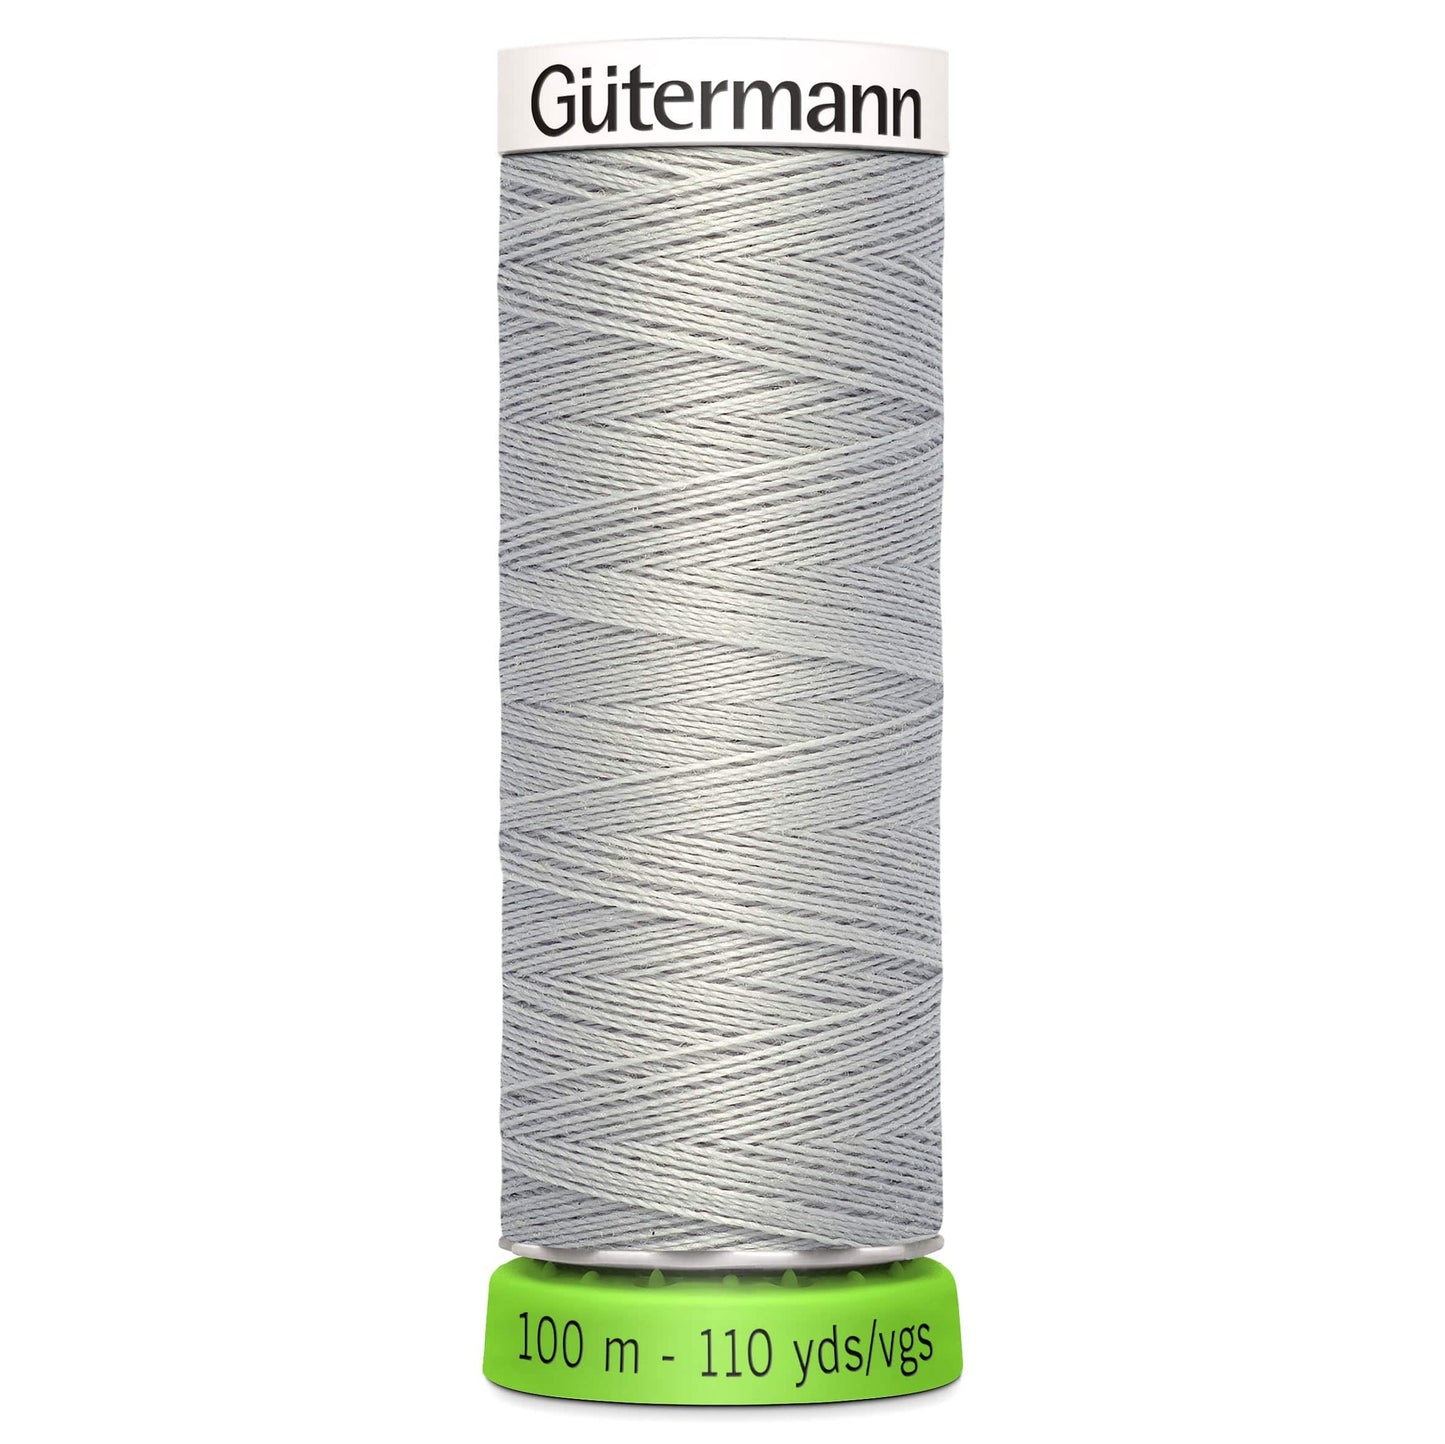 100m Reel Gütermann Recycled Sew-All Thread in Mid Grey 38